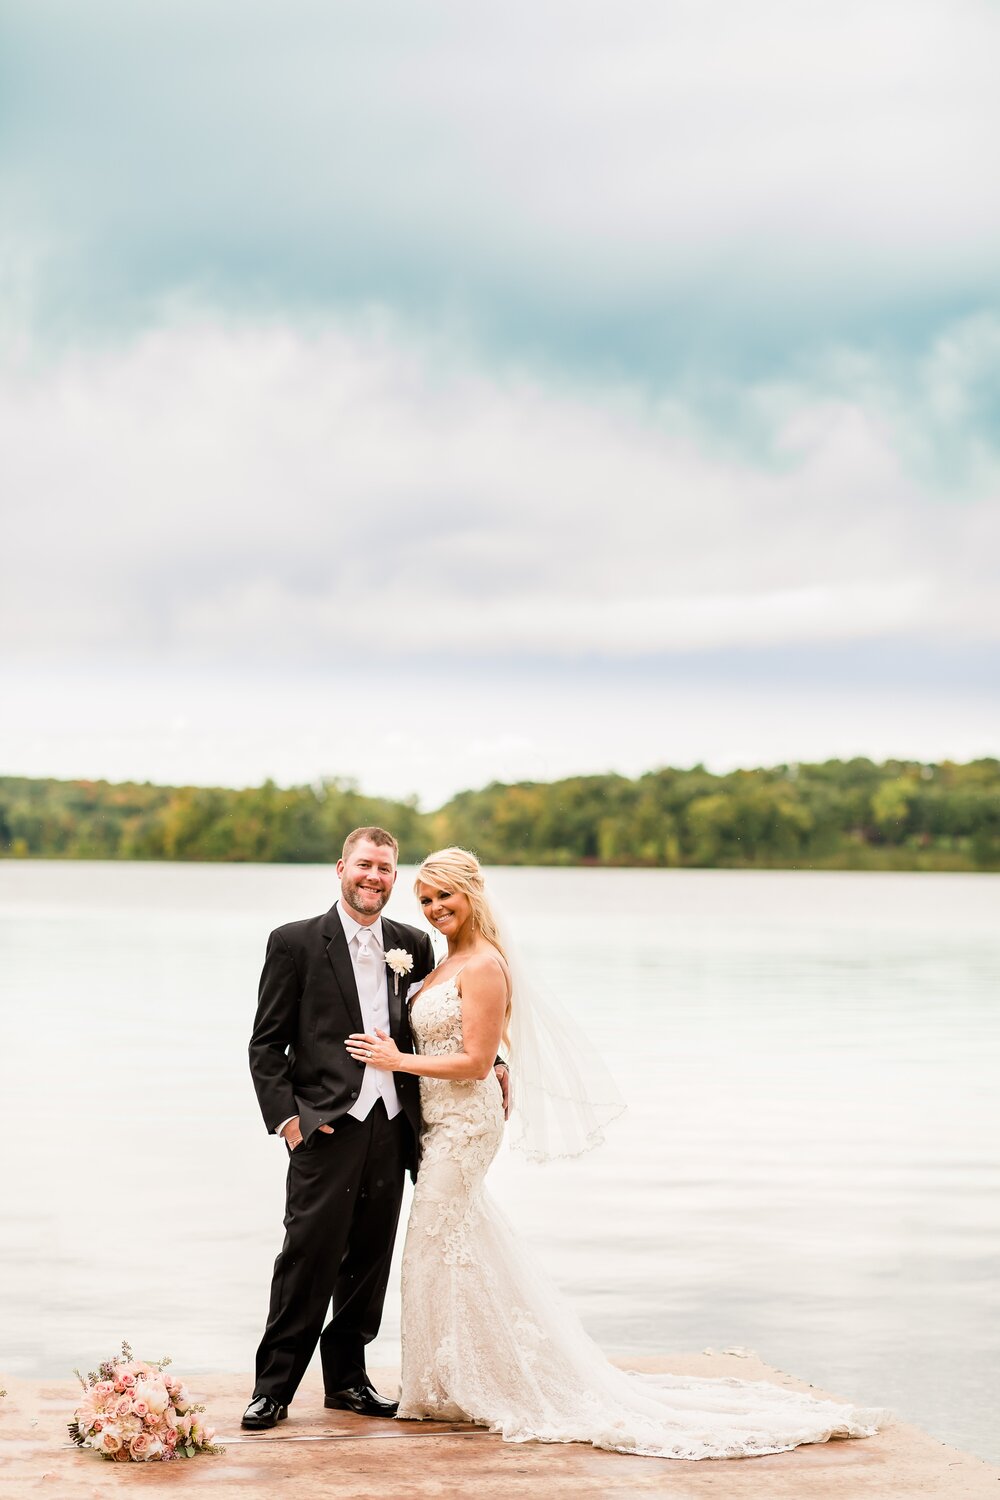 Amber Langerud Photography_Eagle Lake Rustic Styled Outdoor Wedding in Minnesota_6860.jpg